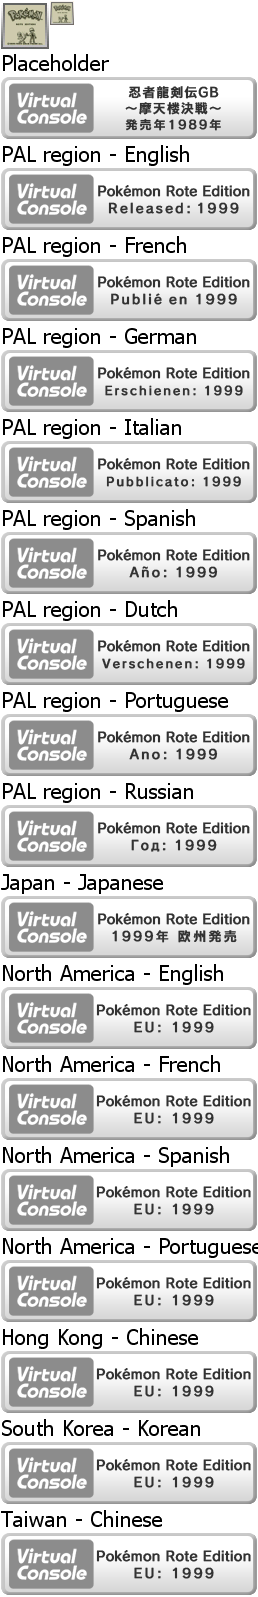 Virtual Console - Pokémon Rote Edition